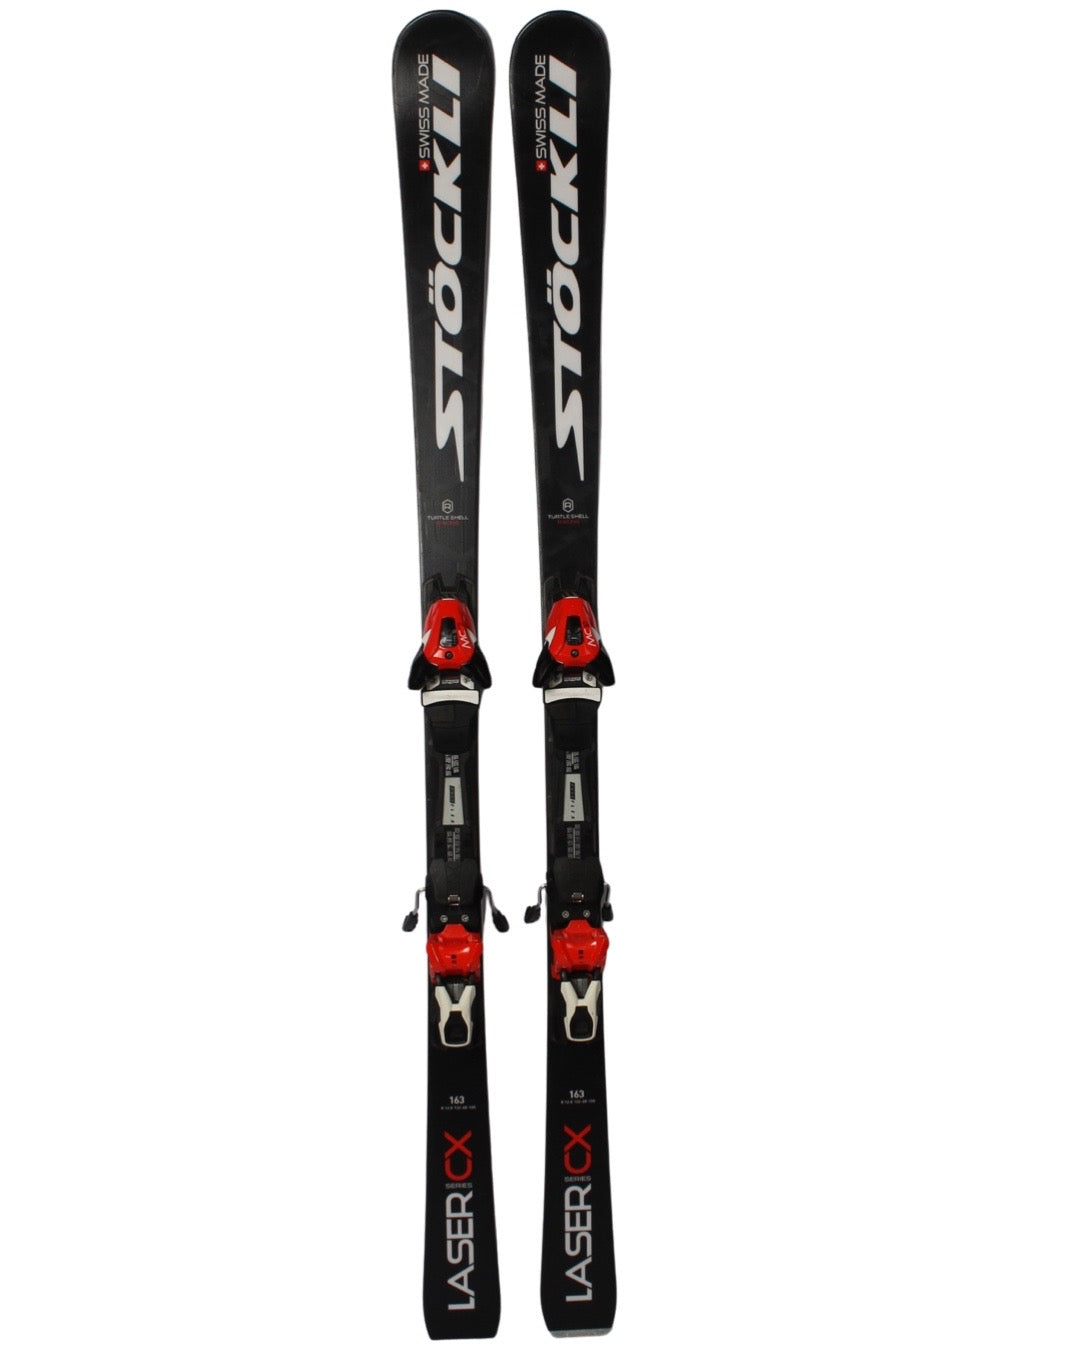 Ski - Stöckli CX Laser - 5299 kr